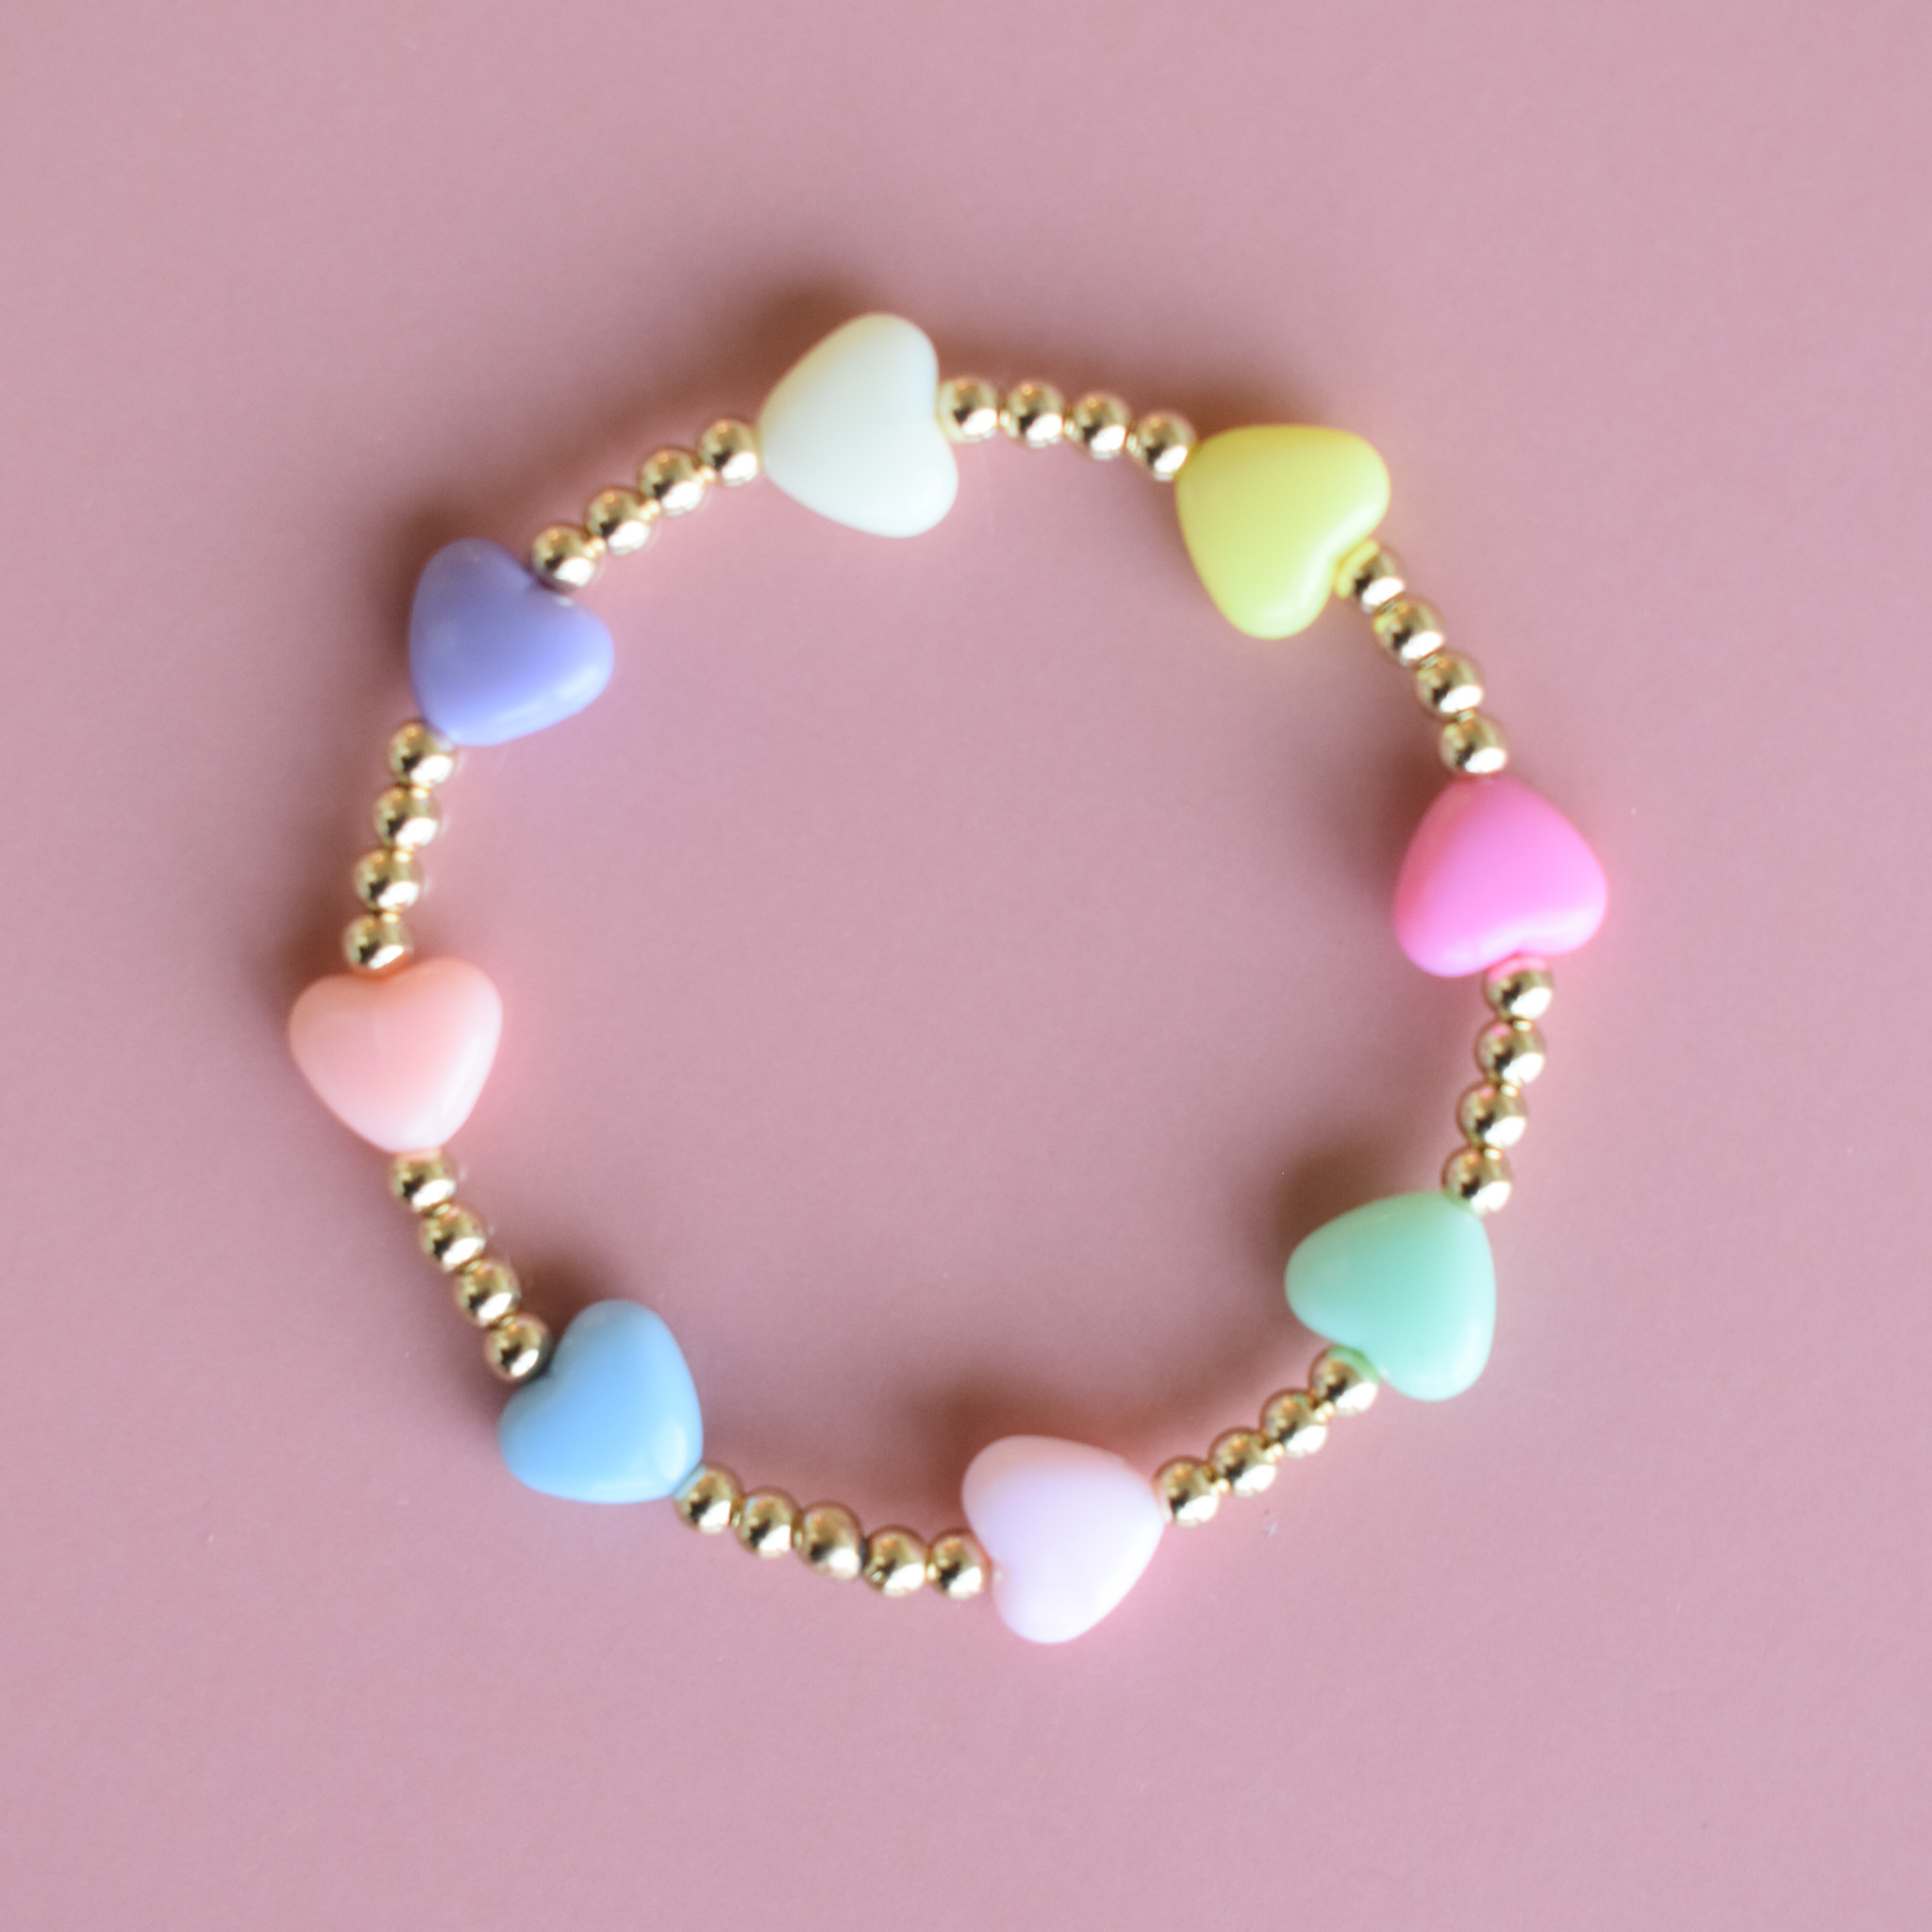 Bracelet_Box_Subscription_Goldie_Girl_Bracelets_gold_filled_charm_mommy_me_Valentines_heart_pink6